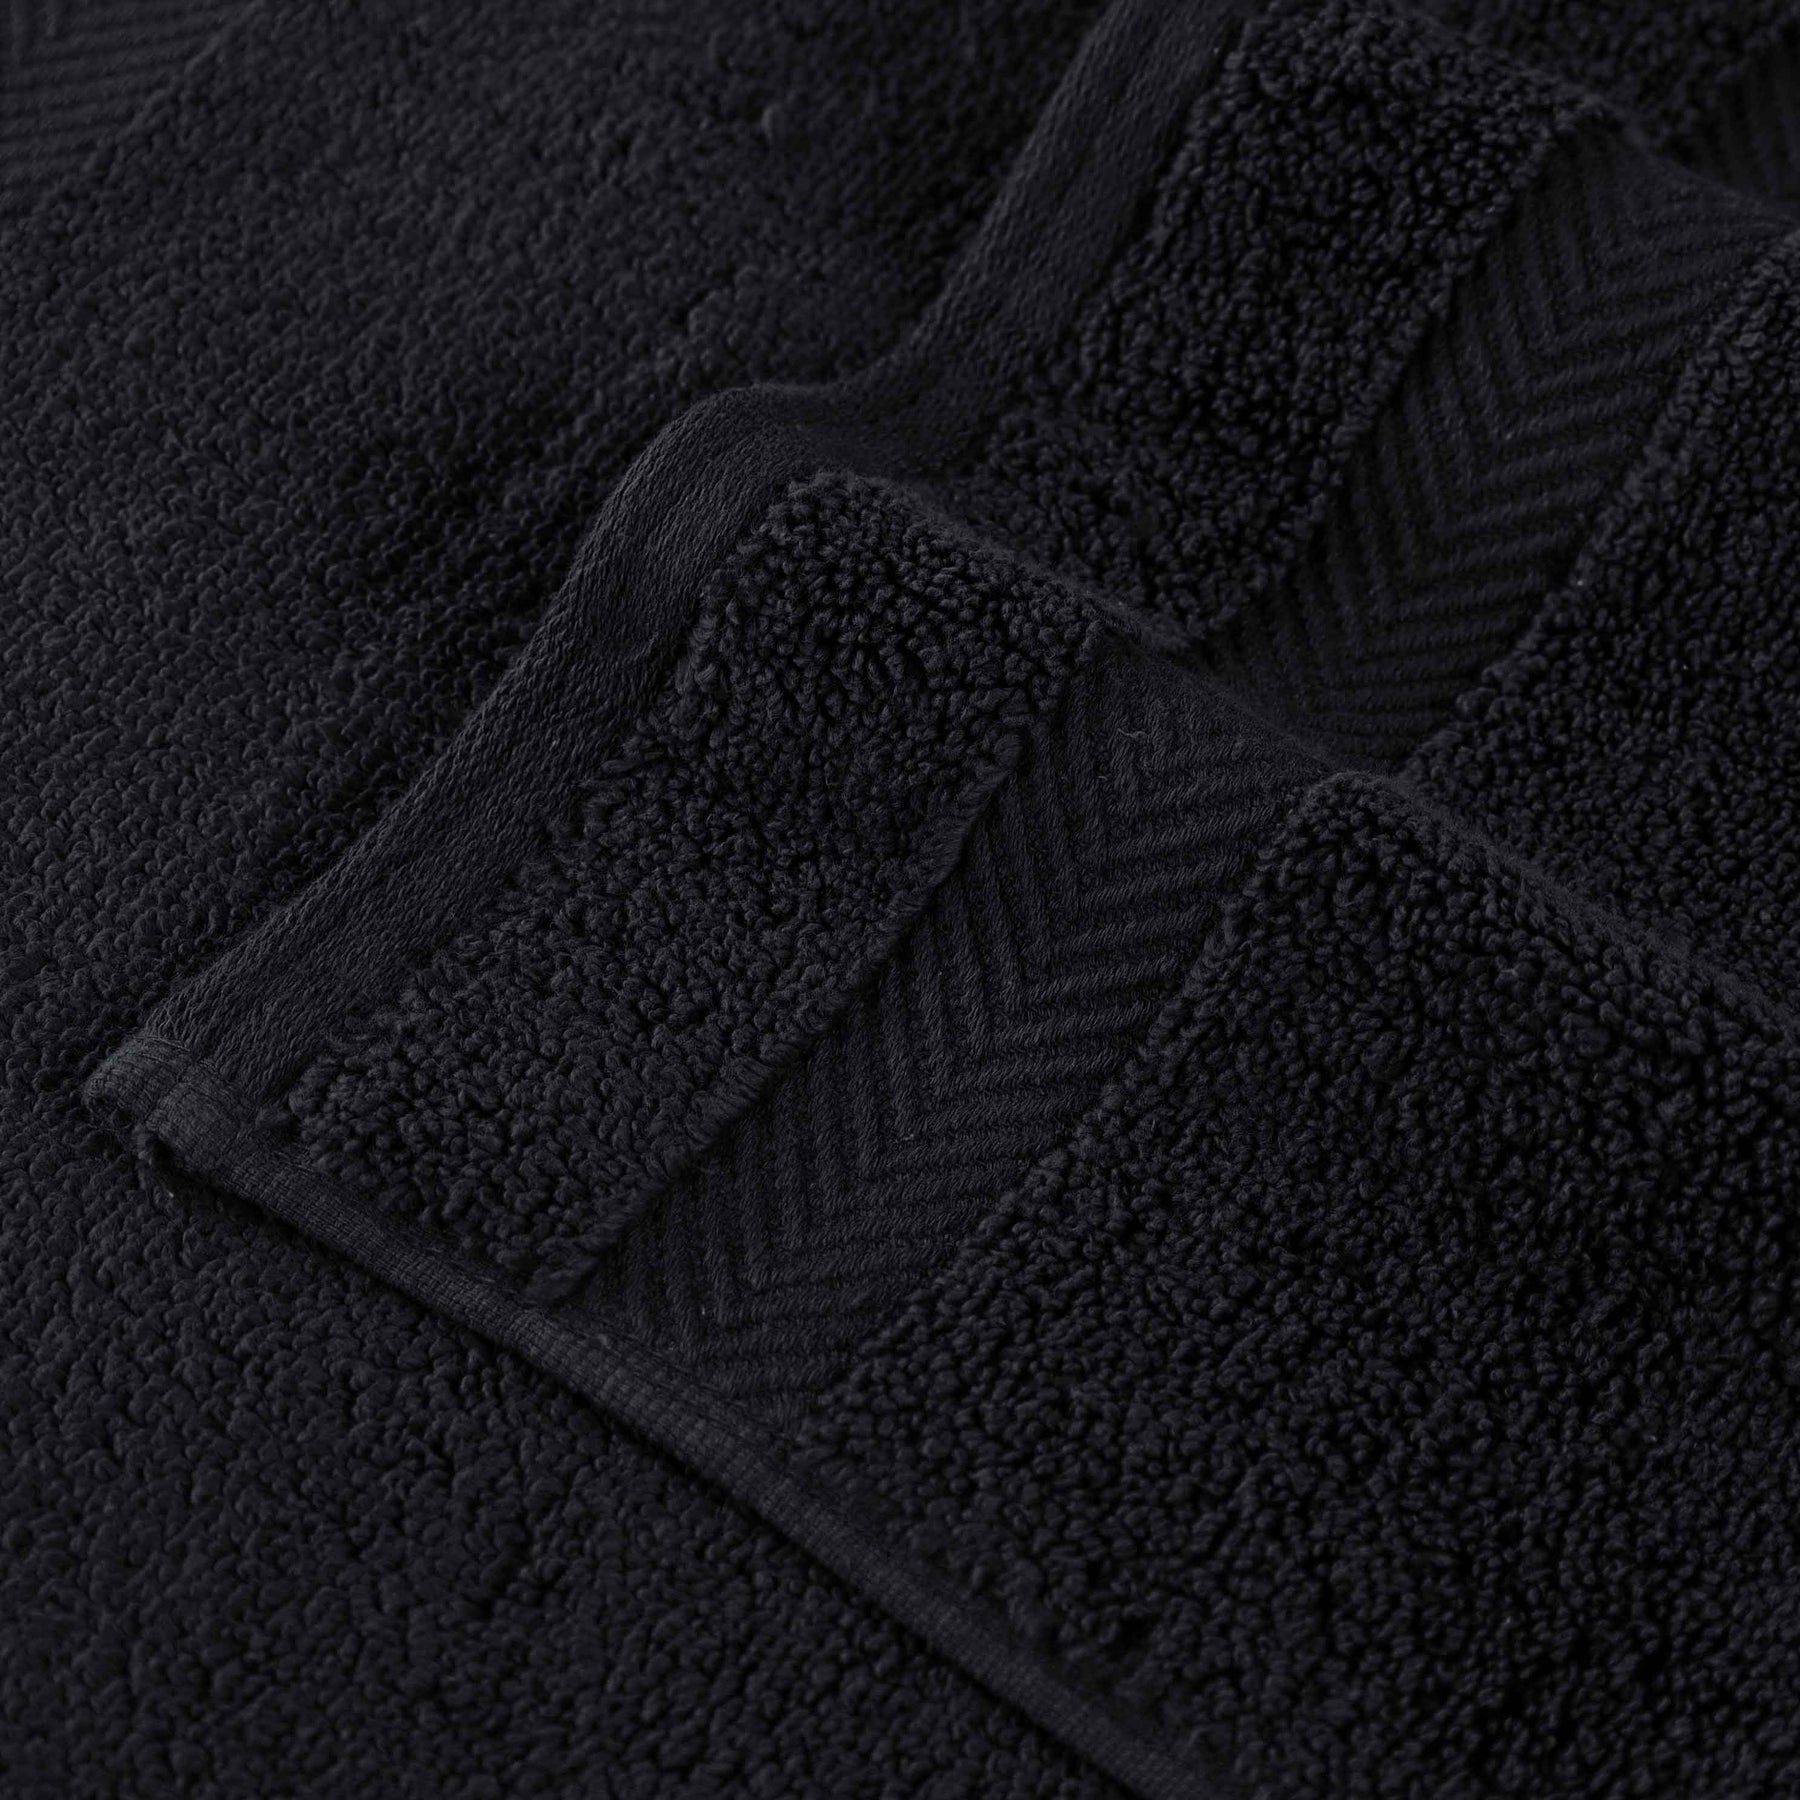 Zero Twist Smart Dry Combed Cotton 2 Piece Bath Towel Set - Black